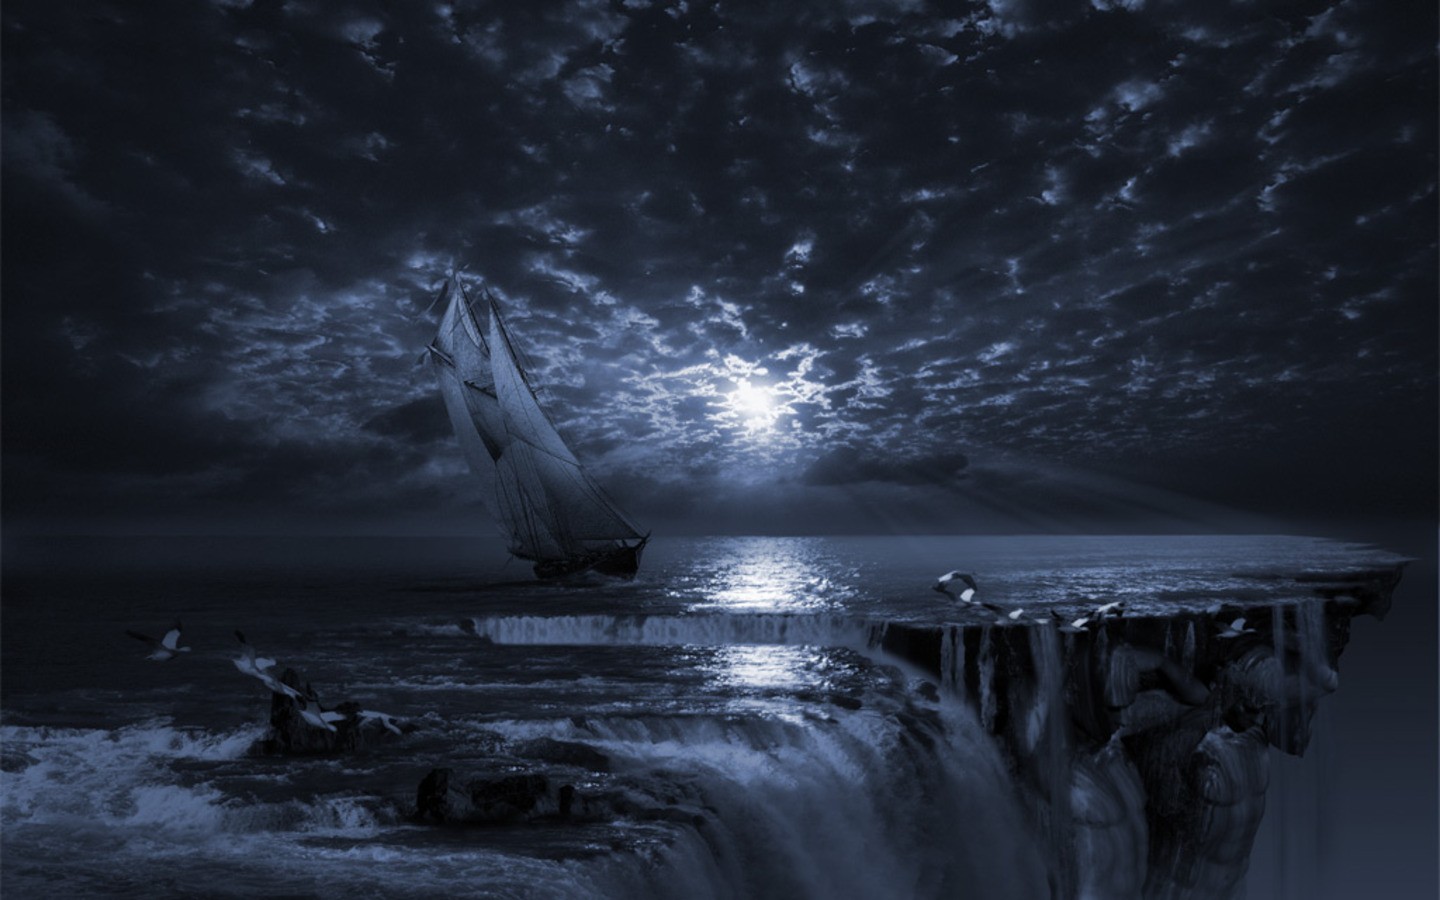 General 1440x900 abstract sailing ship moon rays water fantasy art artwork sky waterfall digital art rigging (ship) vehicle clouds